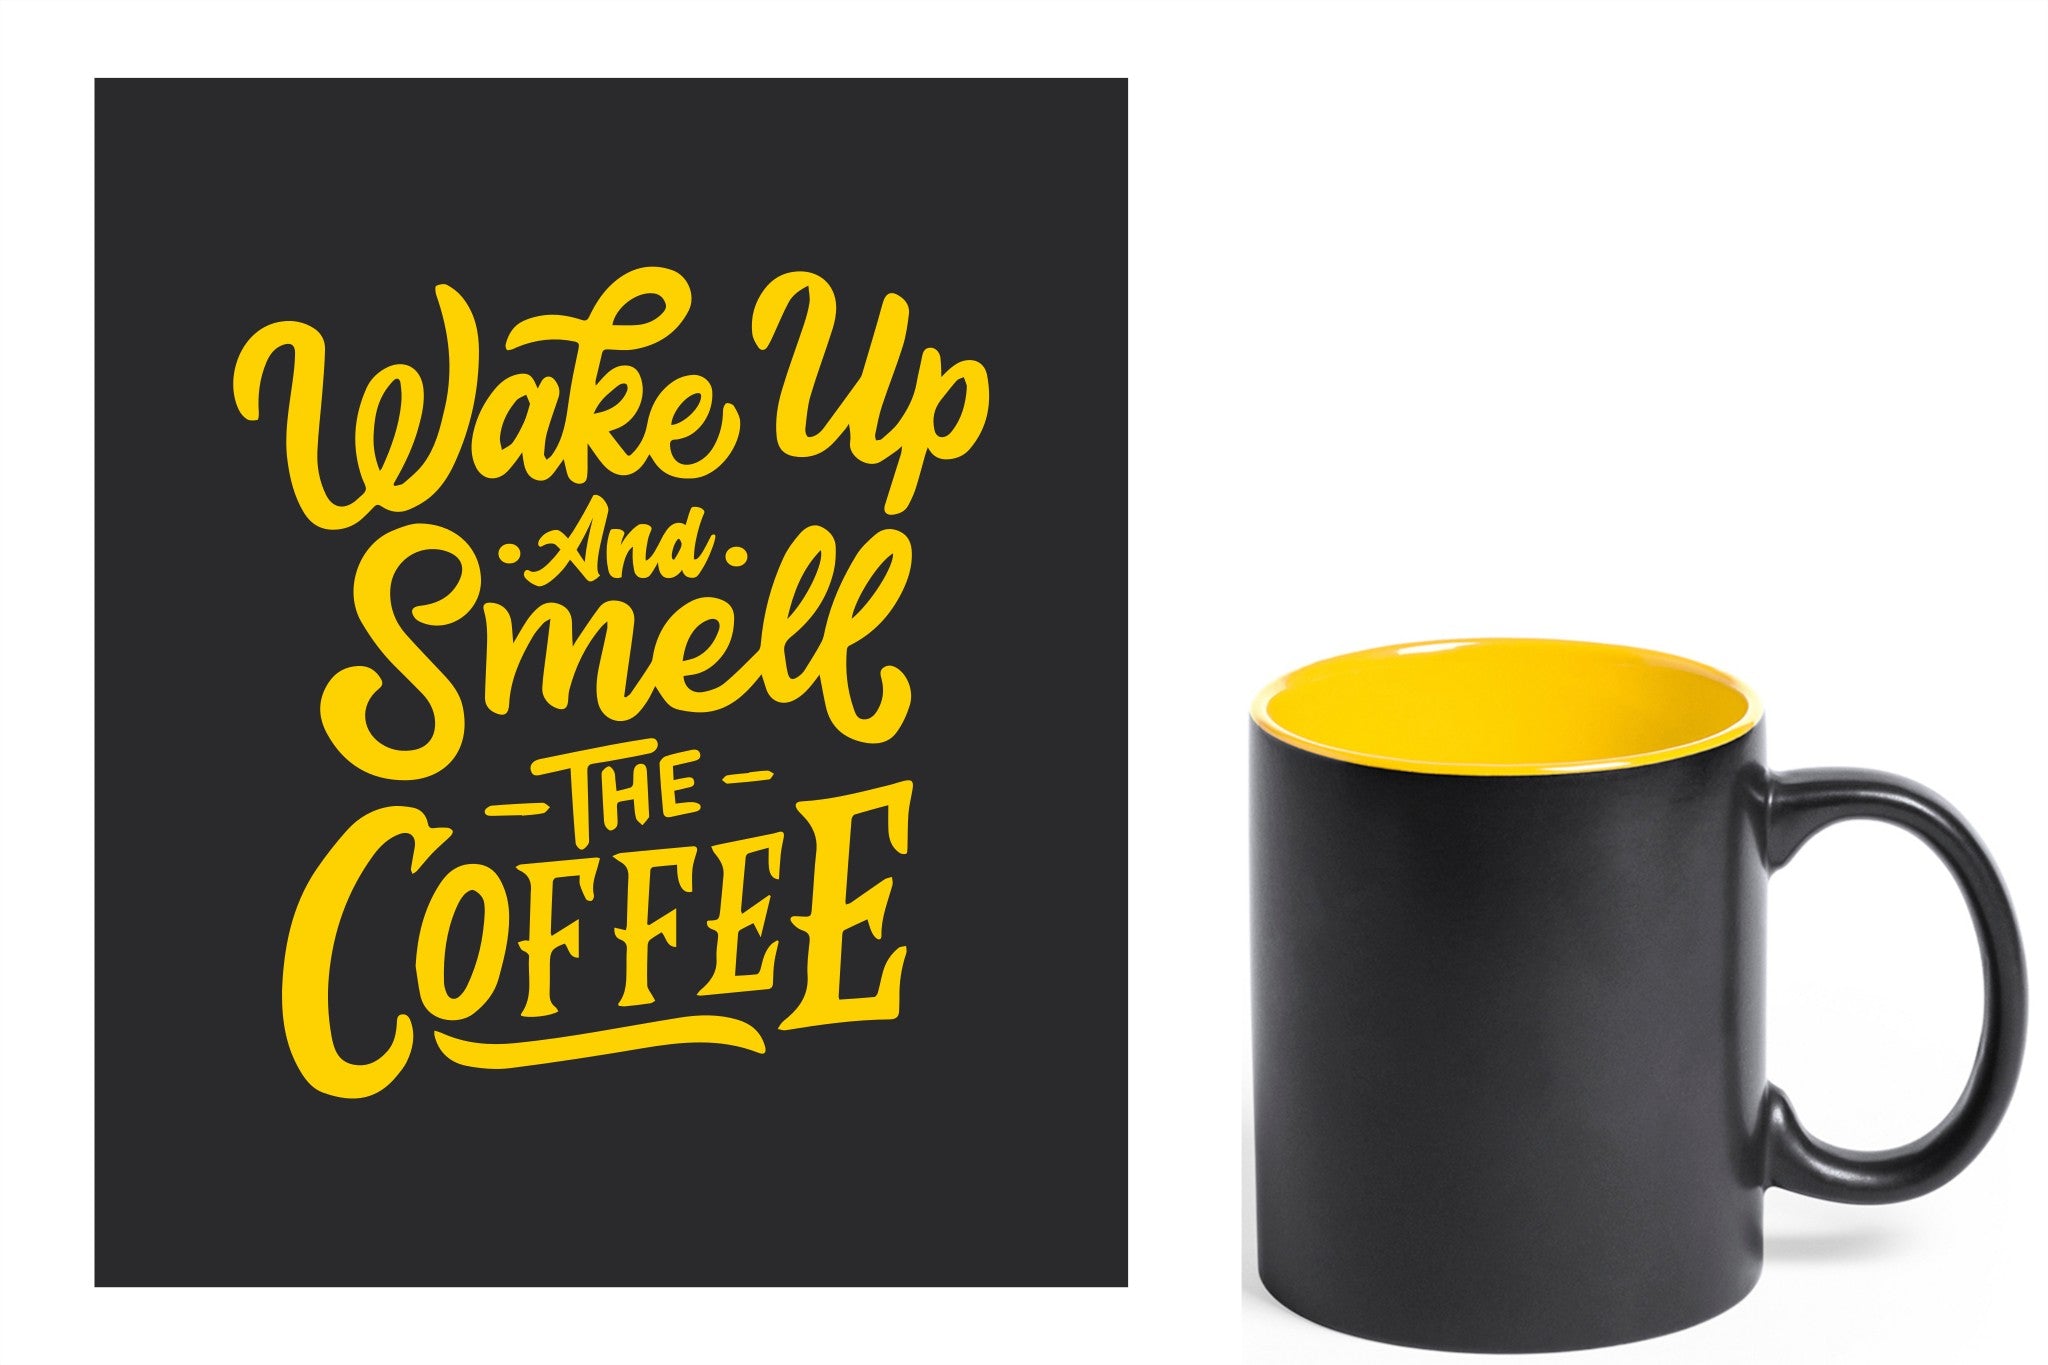 zwarte keramische mok met gele gravure  'Wake up and smell the coffee'.